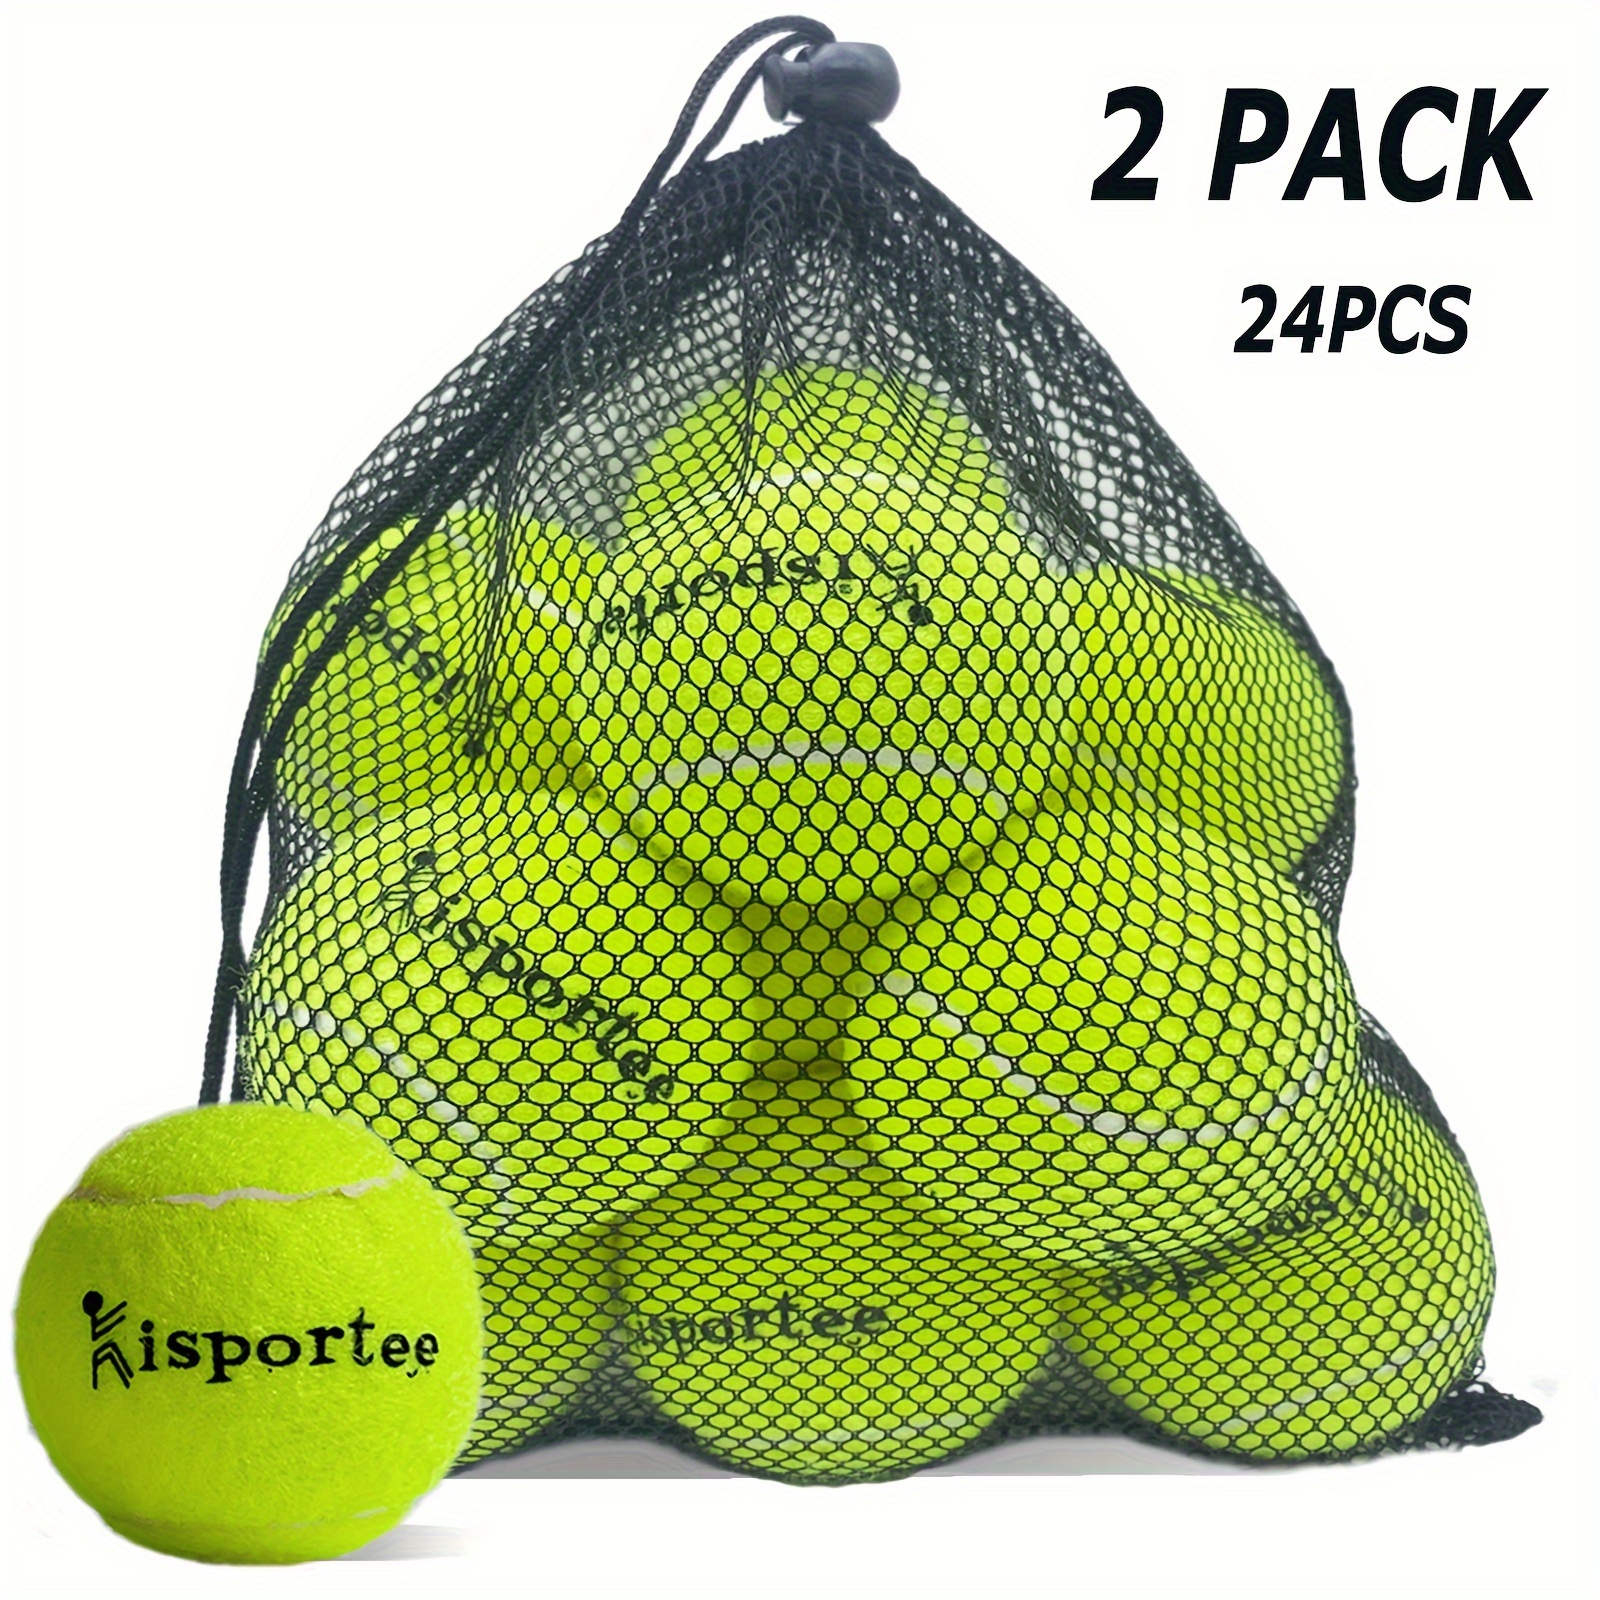 

Tennis Balls, 24pcs Advanced Tennis Ball Practice Balls, Tennis Balls For Dog, Come With Mesh Bag For Transport, Good For Beginner Training Tennis Ball